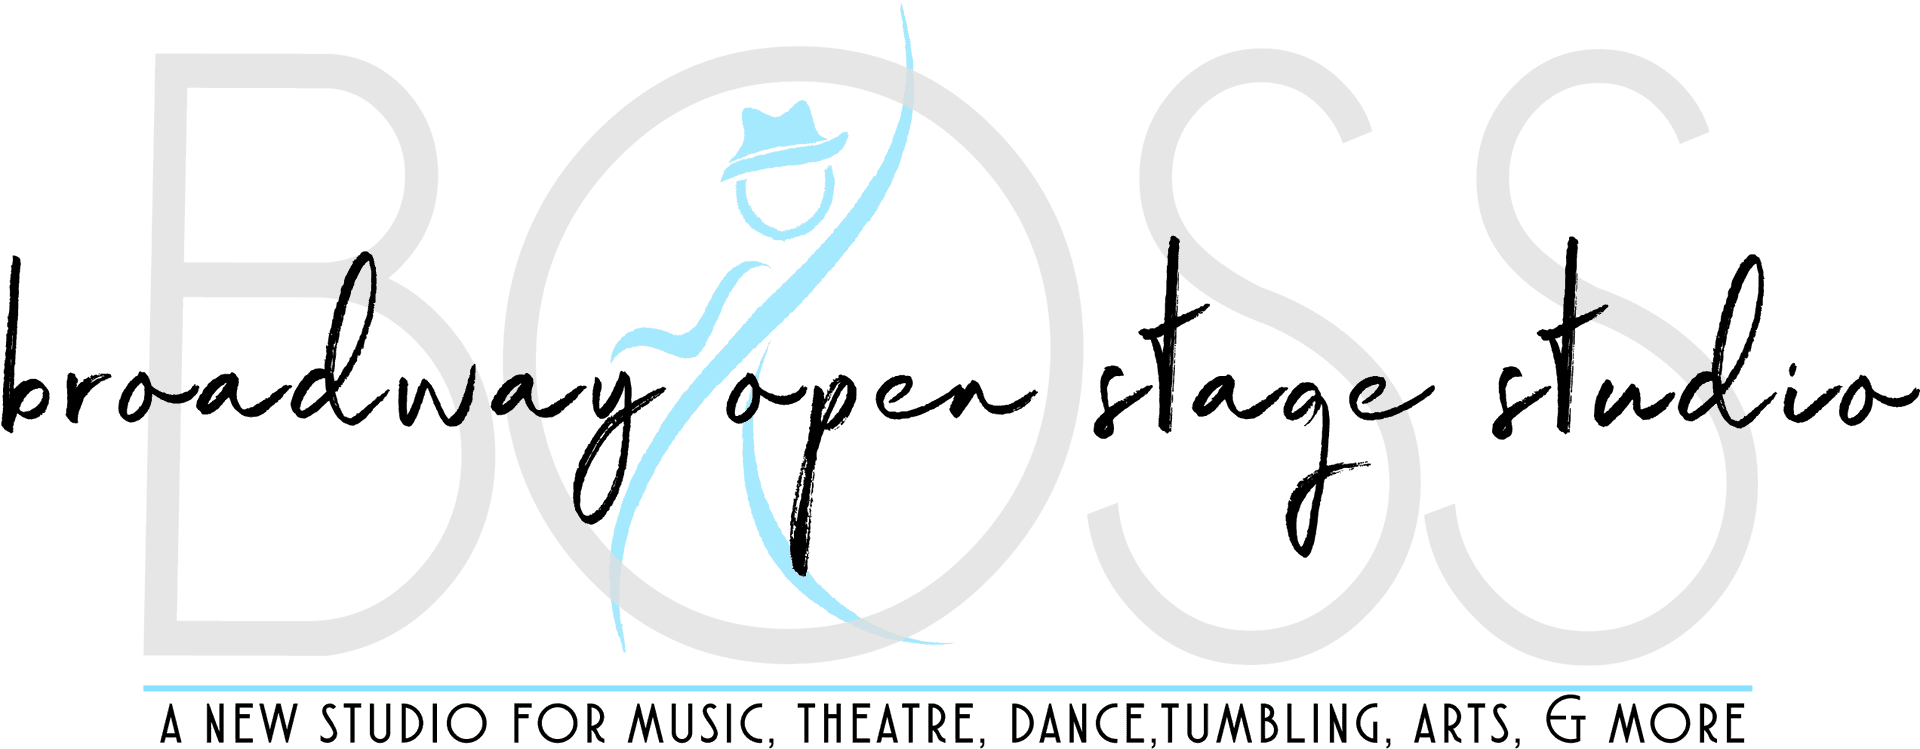 Broadway Open Stage Studio Logo PNG image